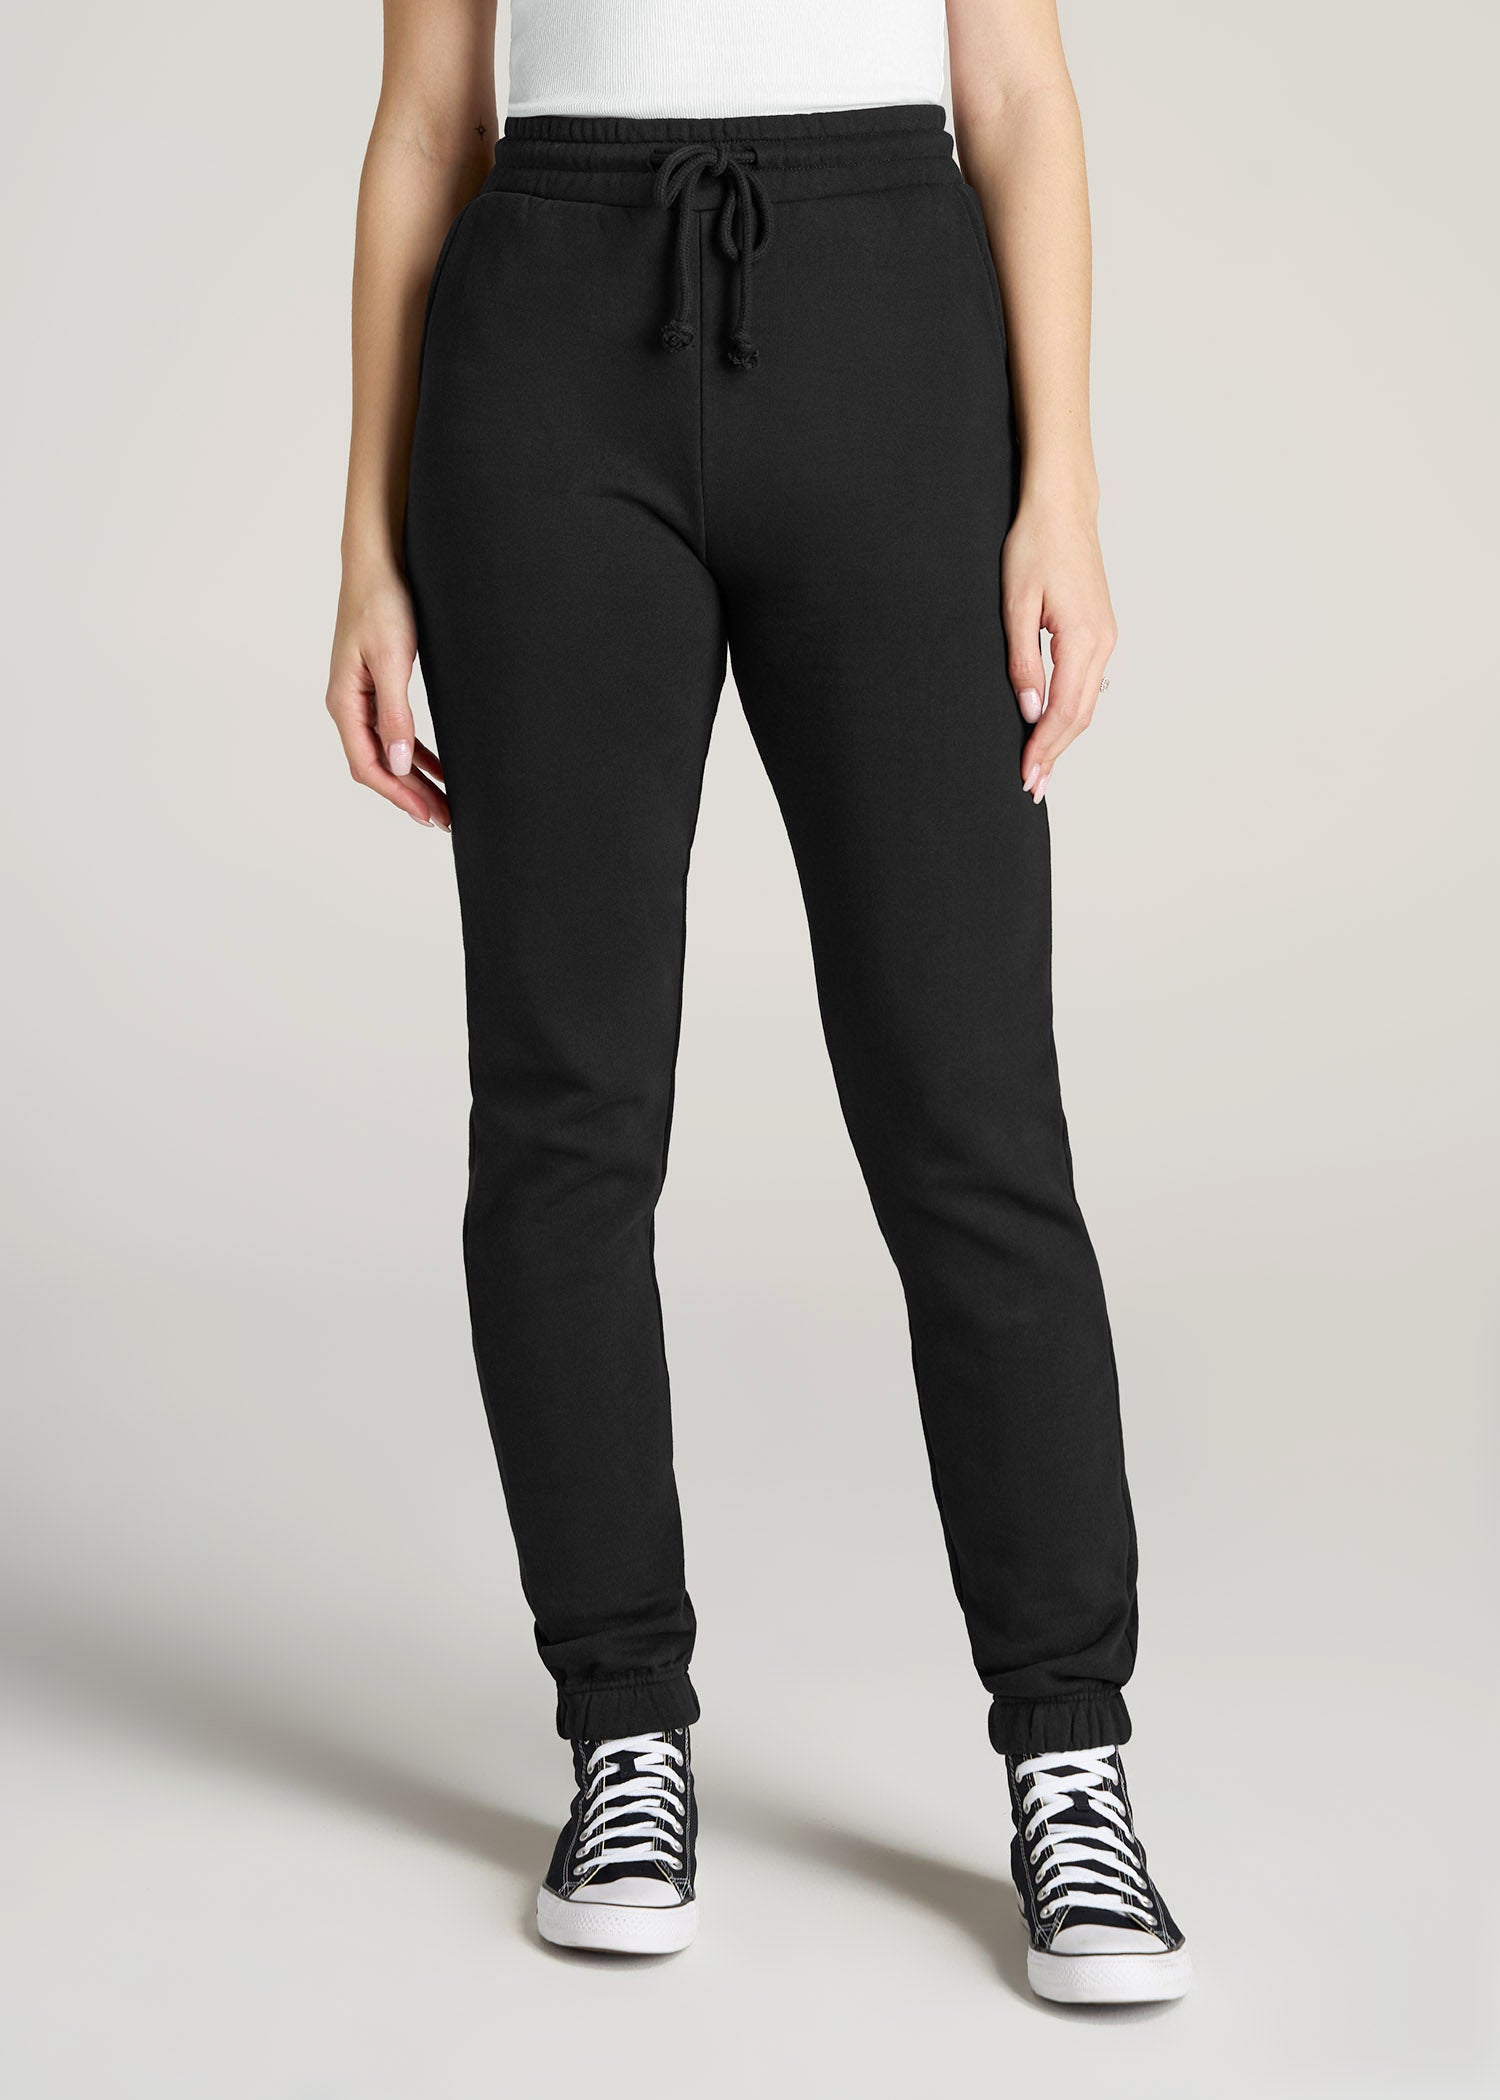 Women's Black Jogger Pants, Size XL